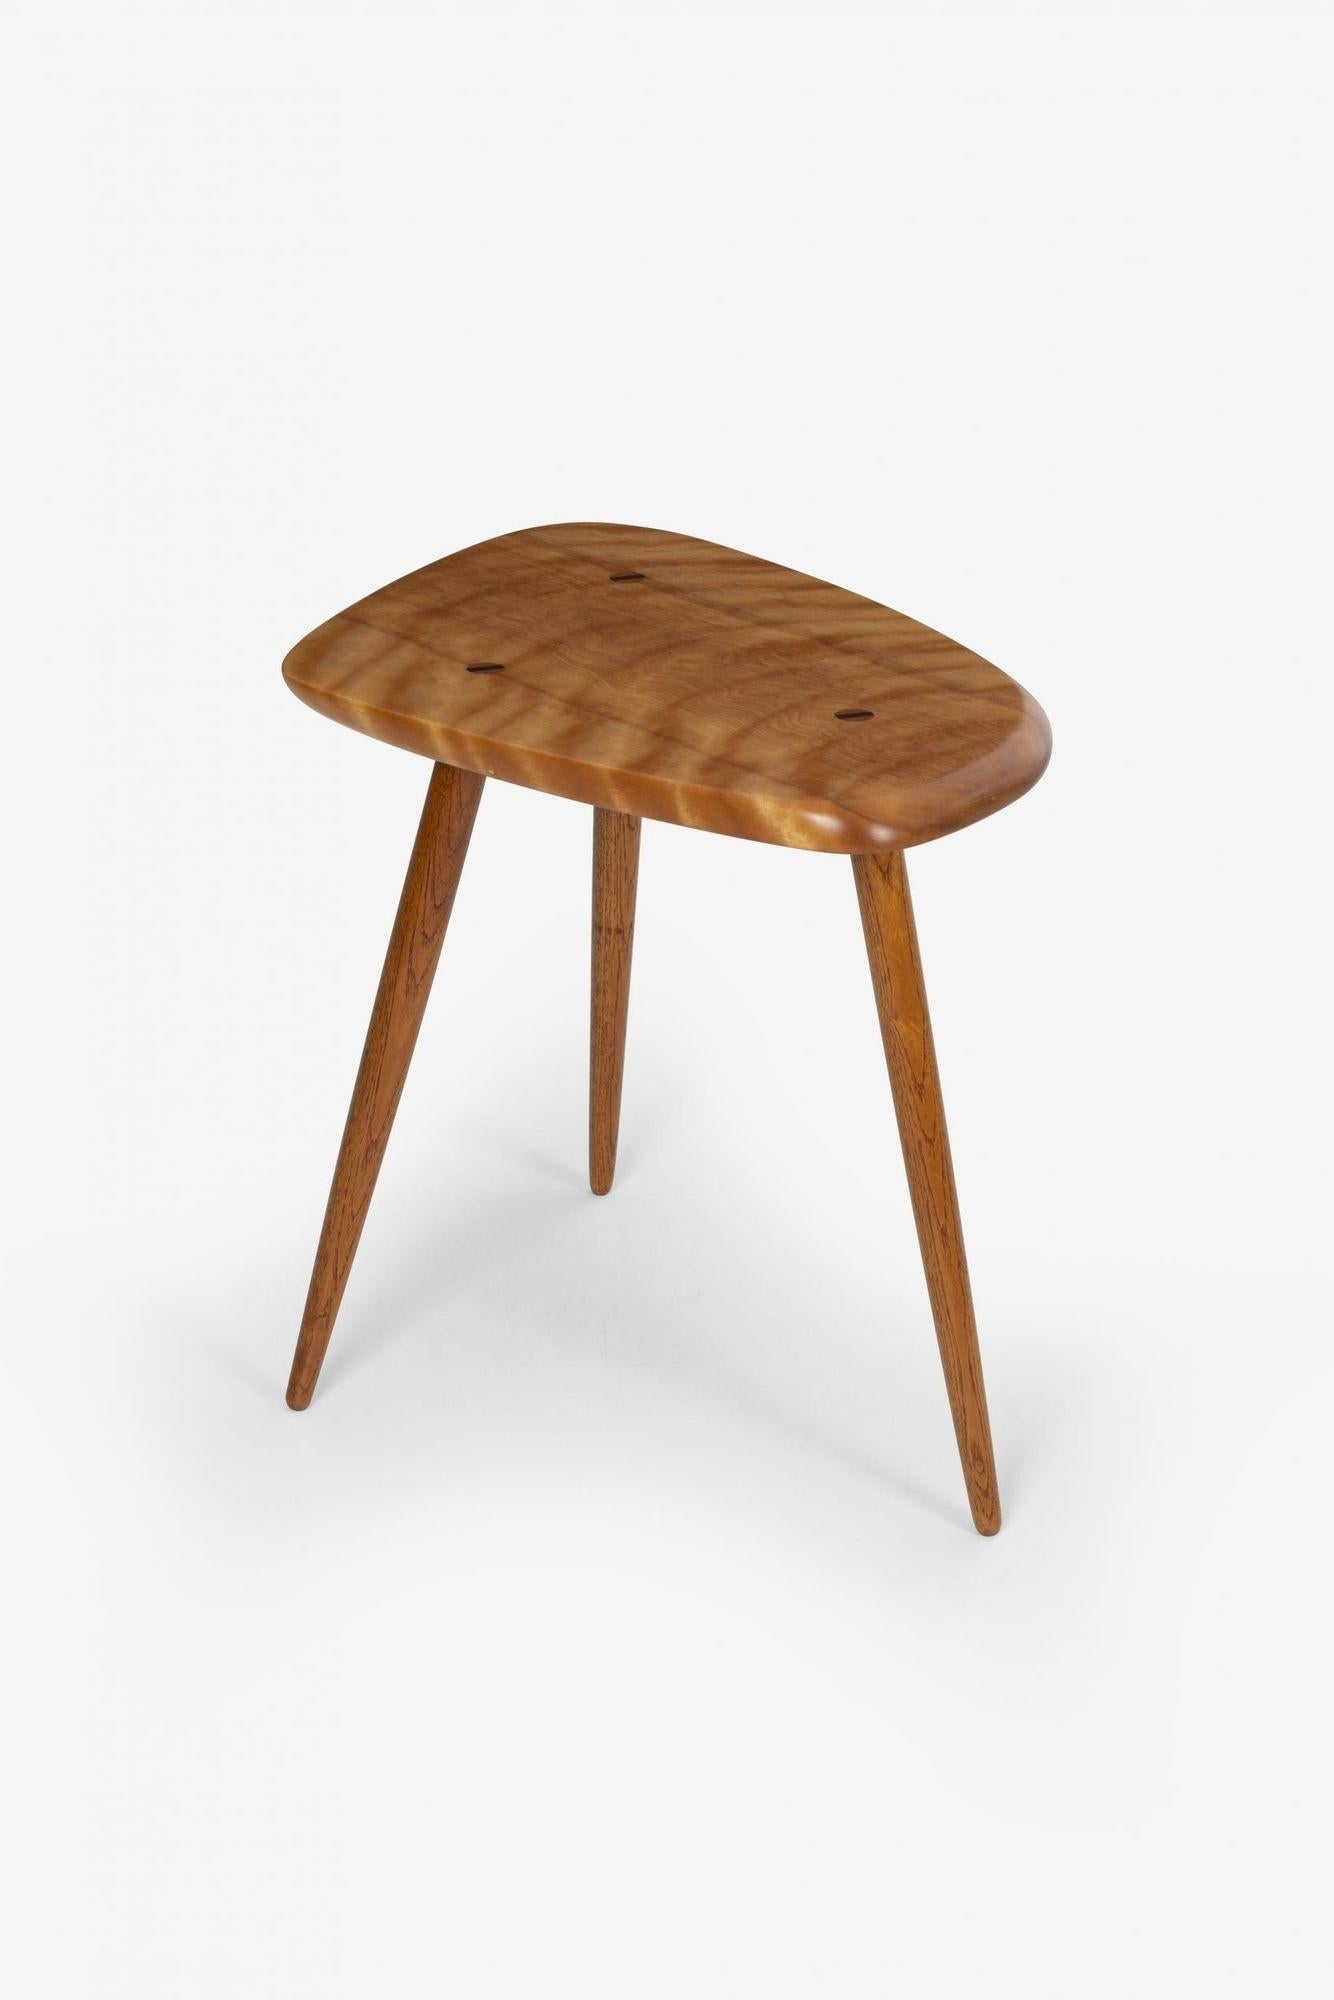 American Craftsman Arthur Espenet Carpenter Three-Legged Occasional Table For Sale